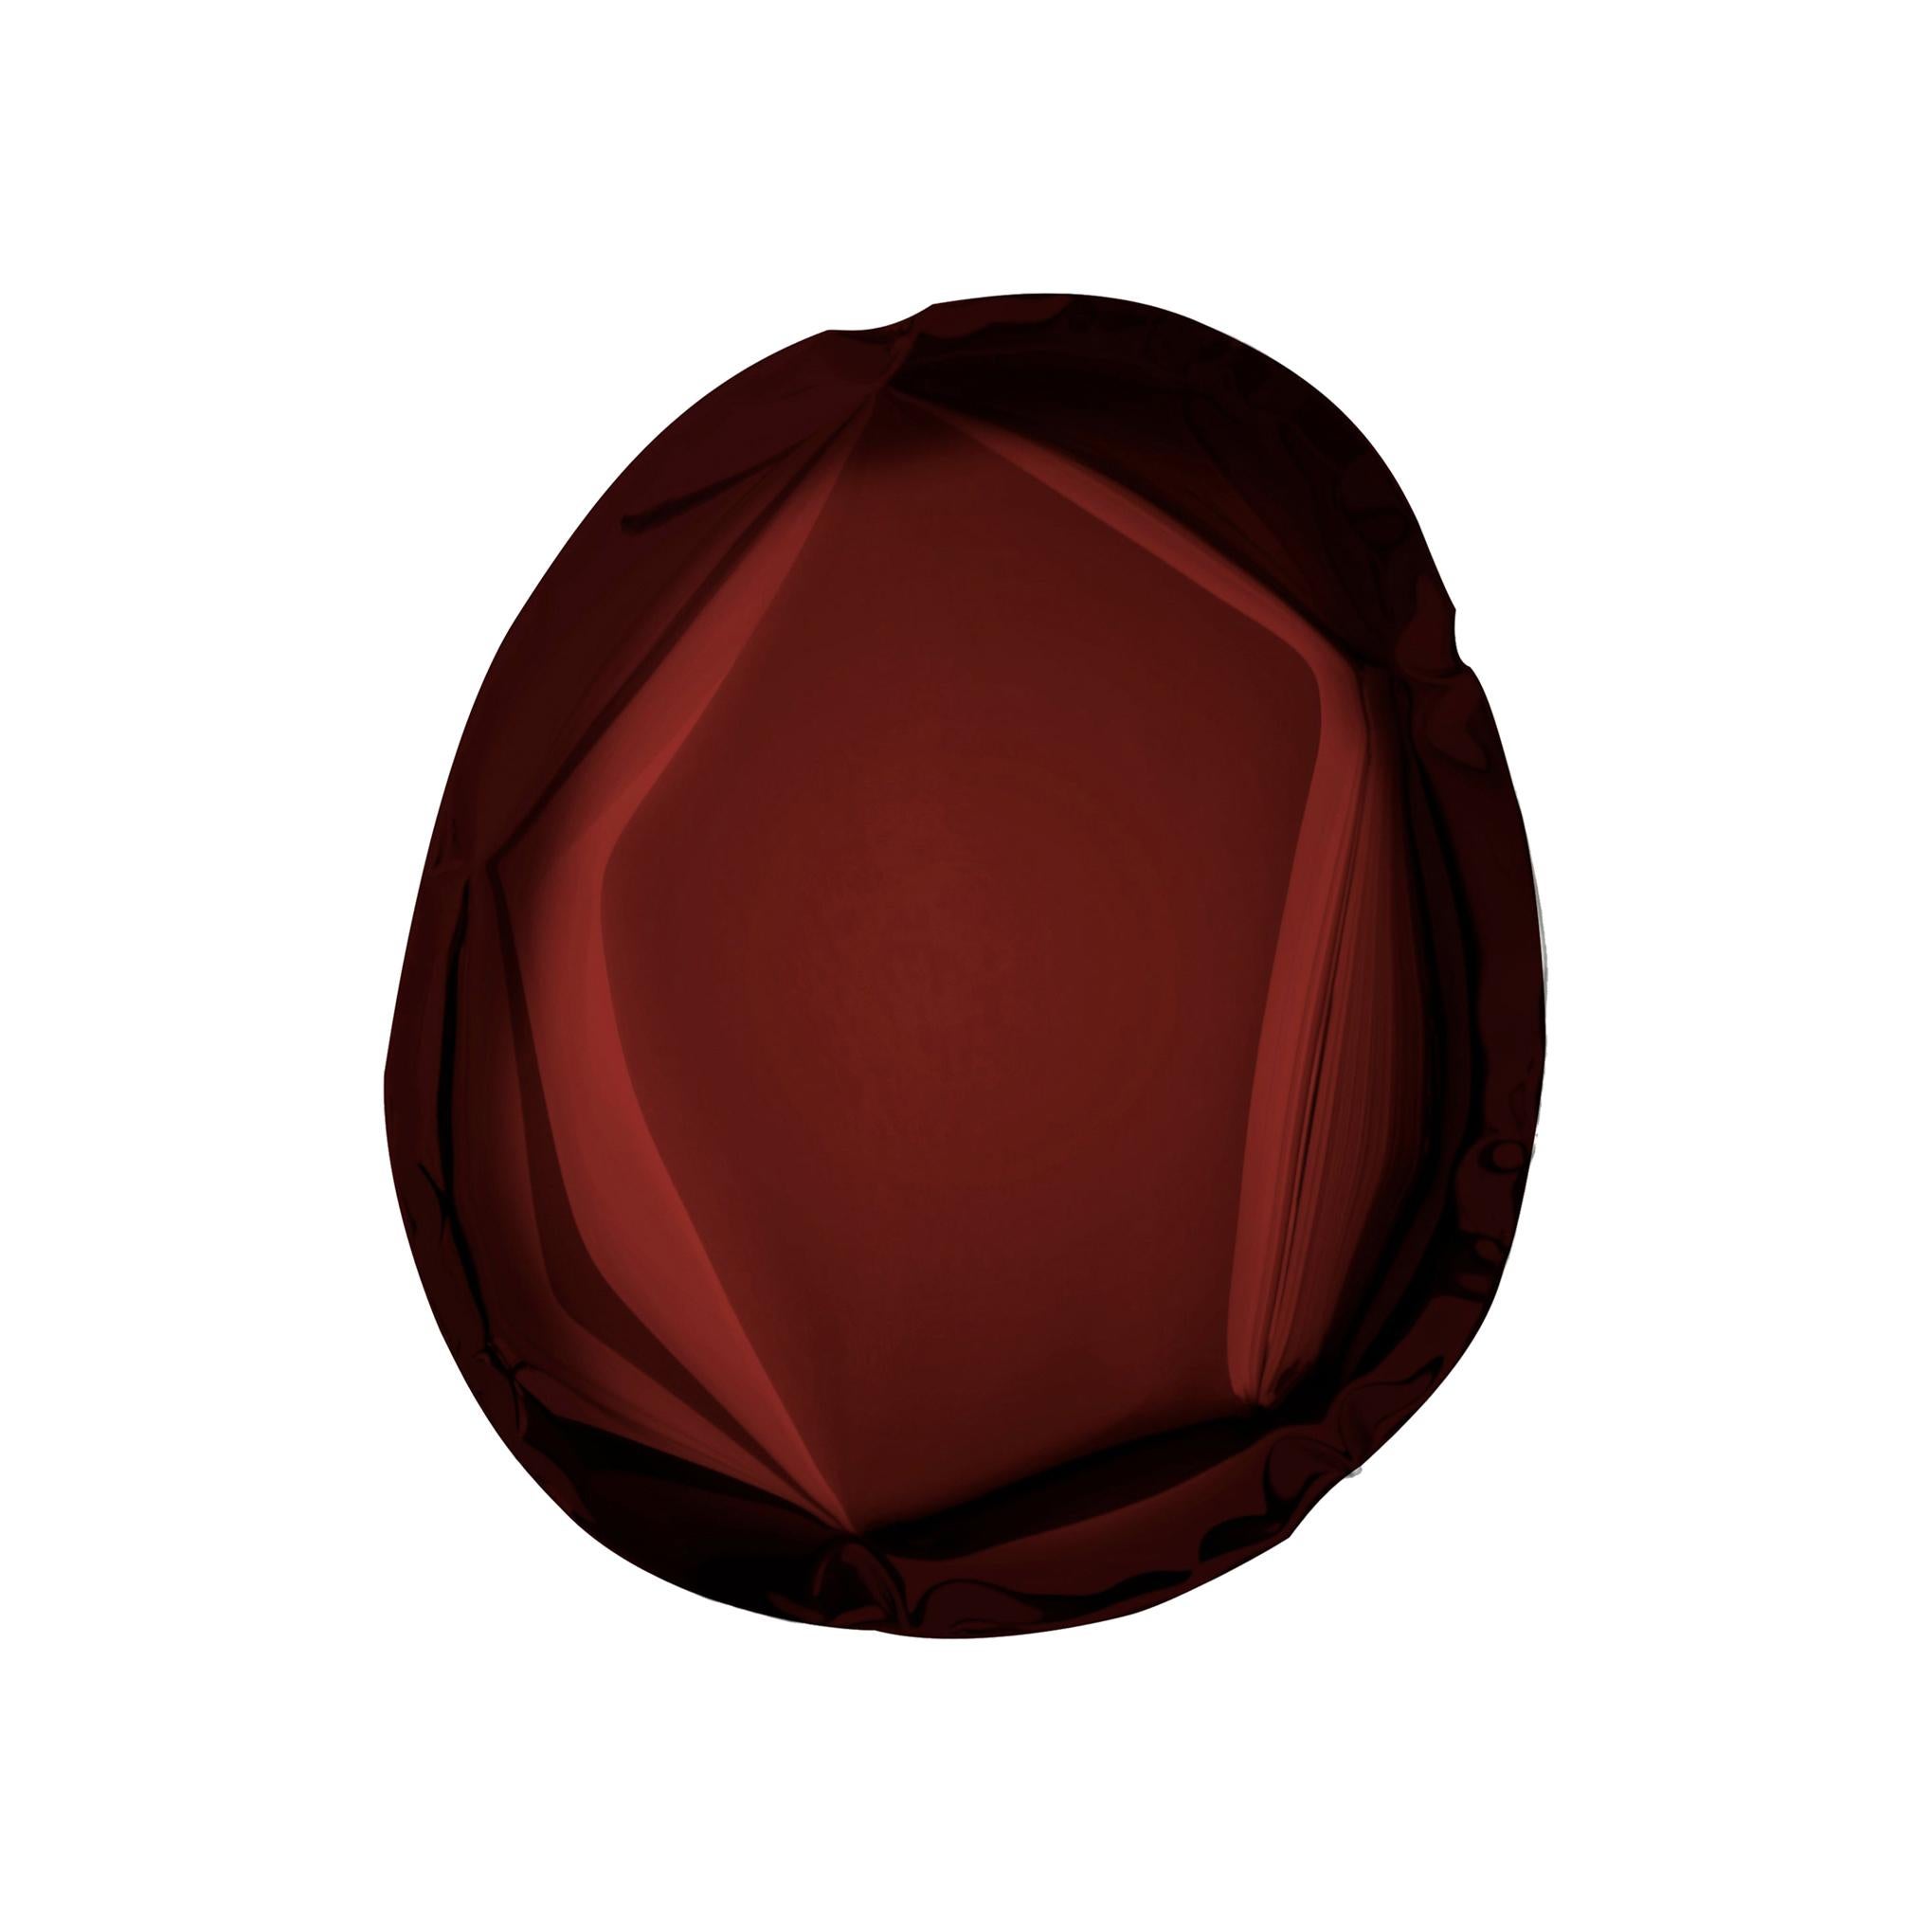 Miroir Tafla O6 rouge rubis, en acier inoxydable poli par Zieta